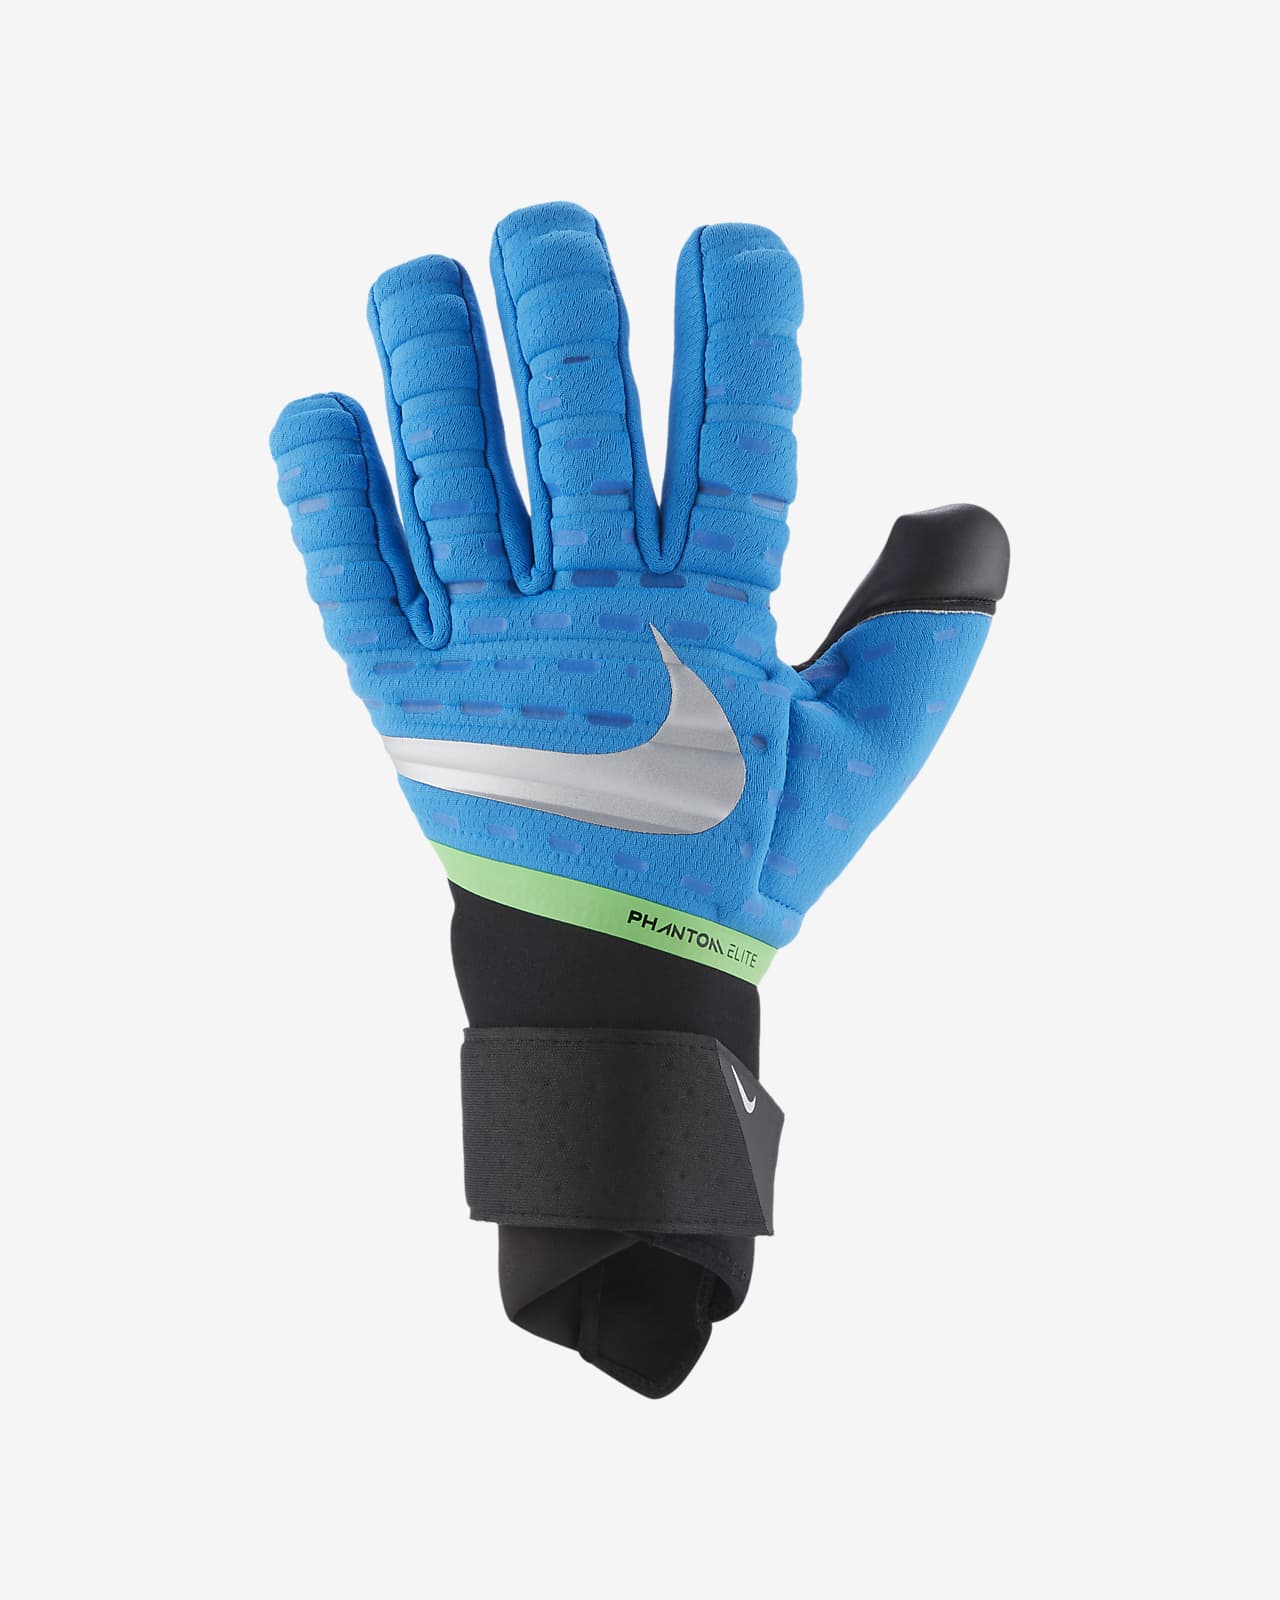 football goalkeeper gloves nike